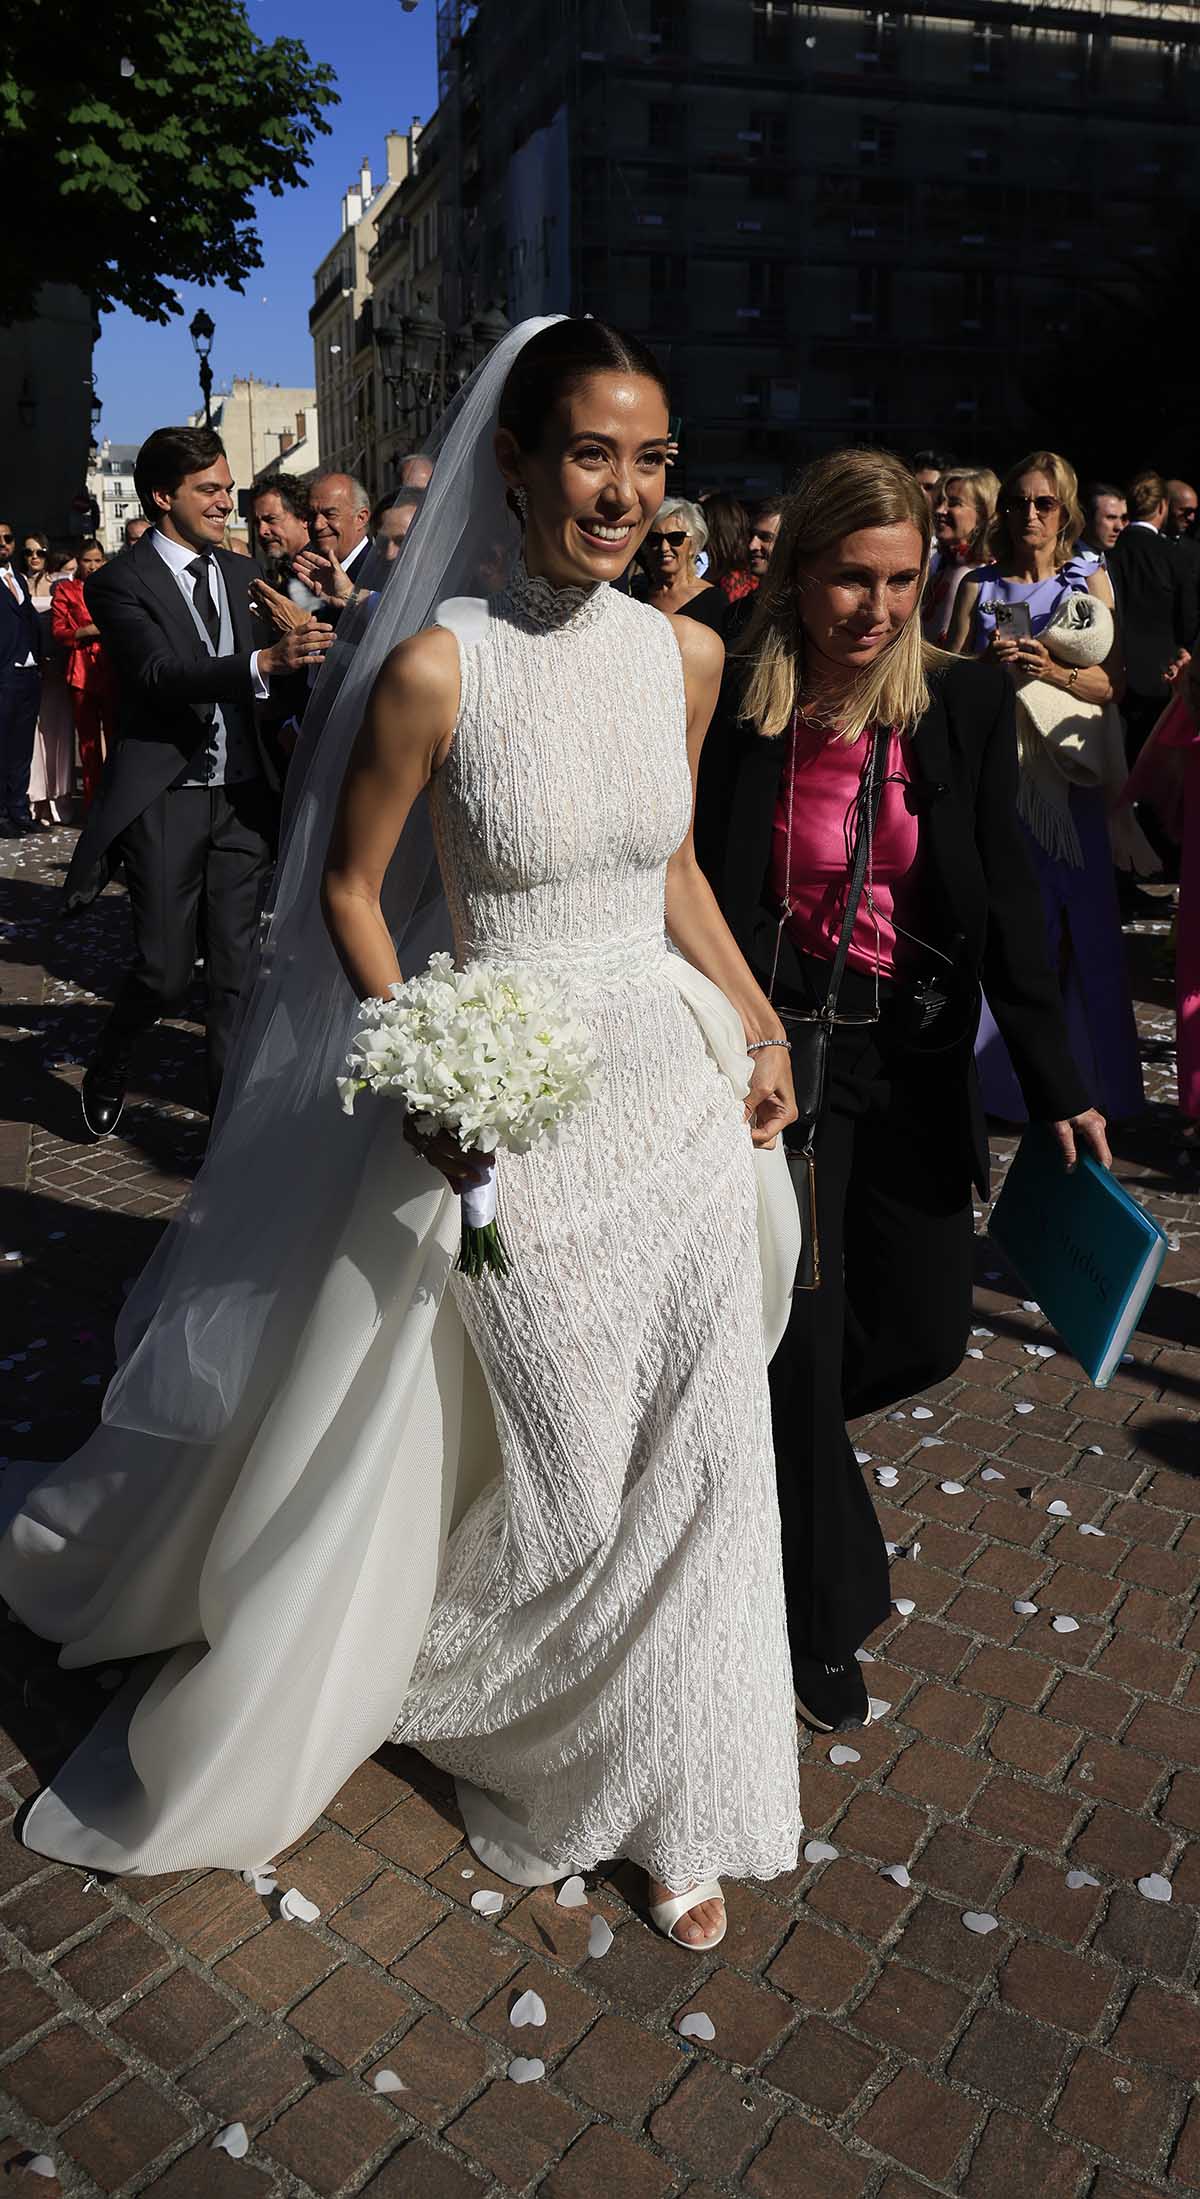 during wedding of Daniel Clara Anne Marie Colling in Paris on Saturday, 3 June 2023.